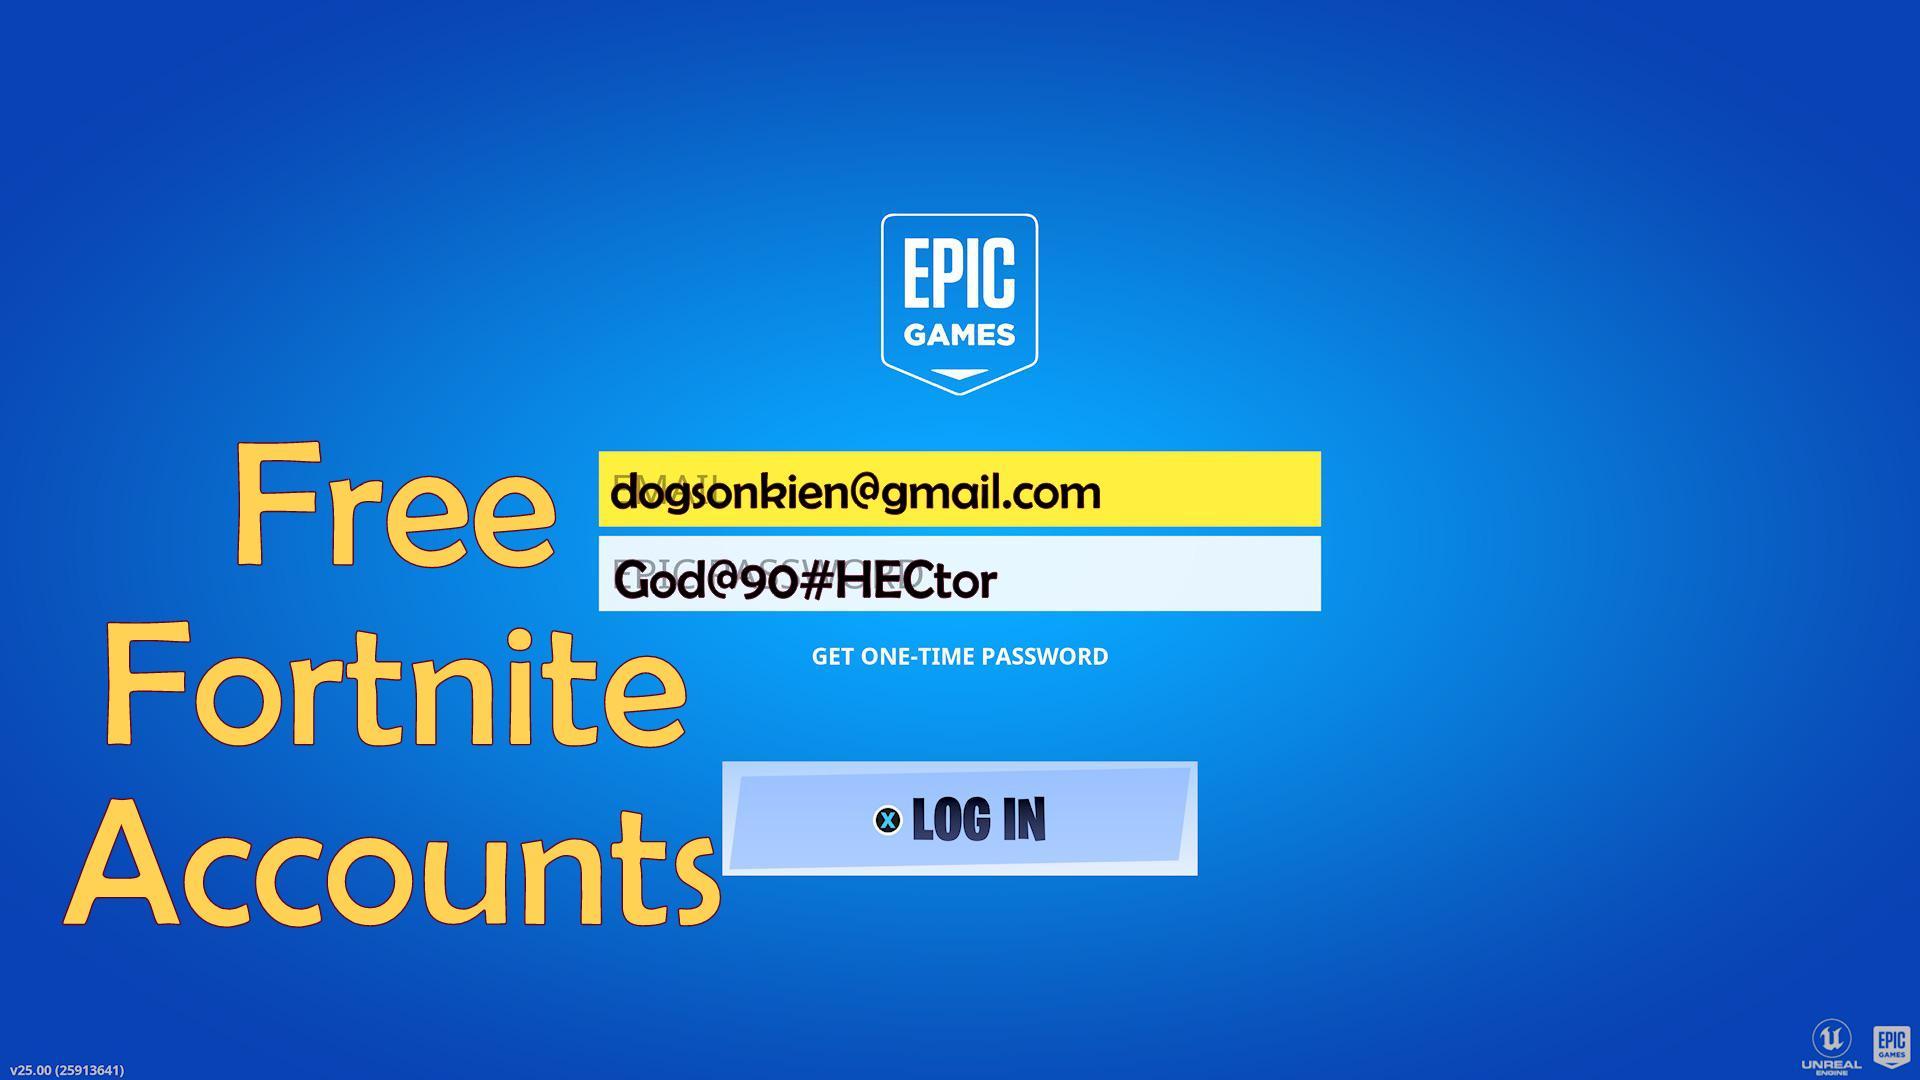 Free Fortnite Accounts